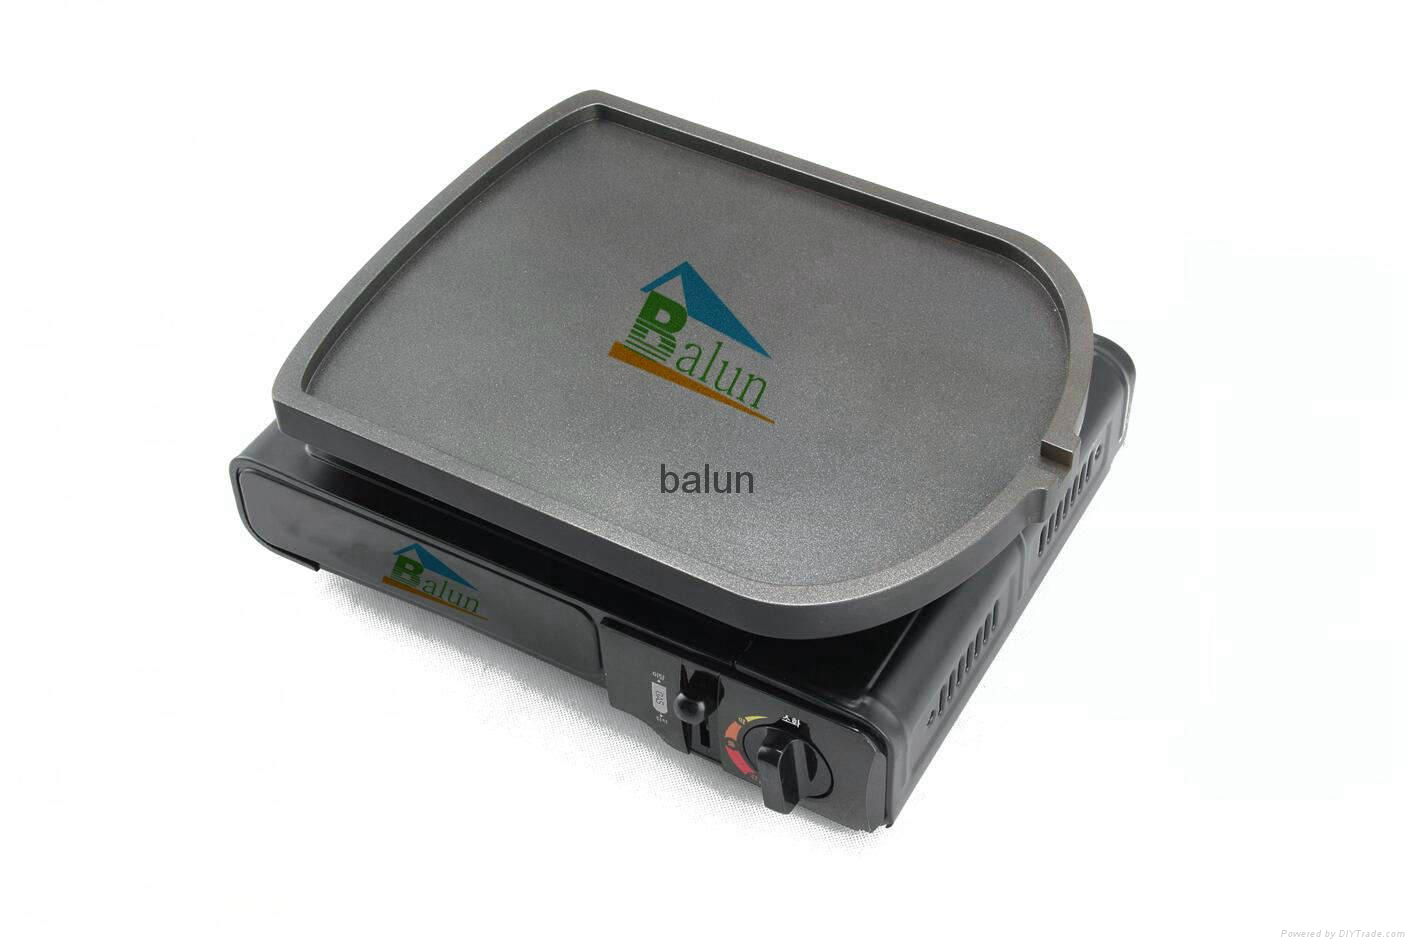 Foshan balun sub graphite non stick pan without oil fume 34vm graphite grill 4